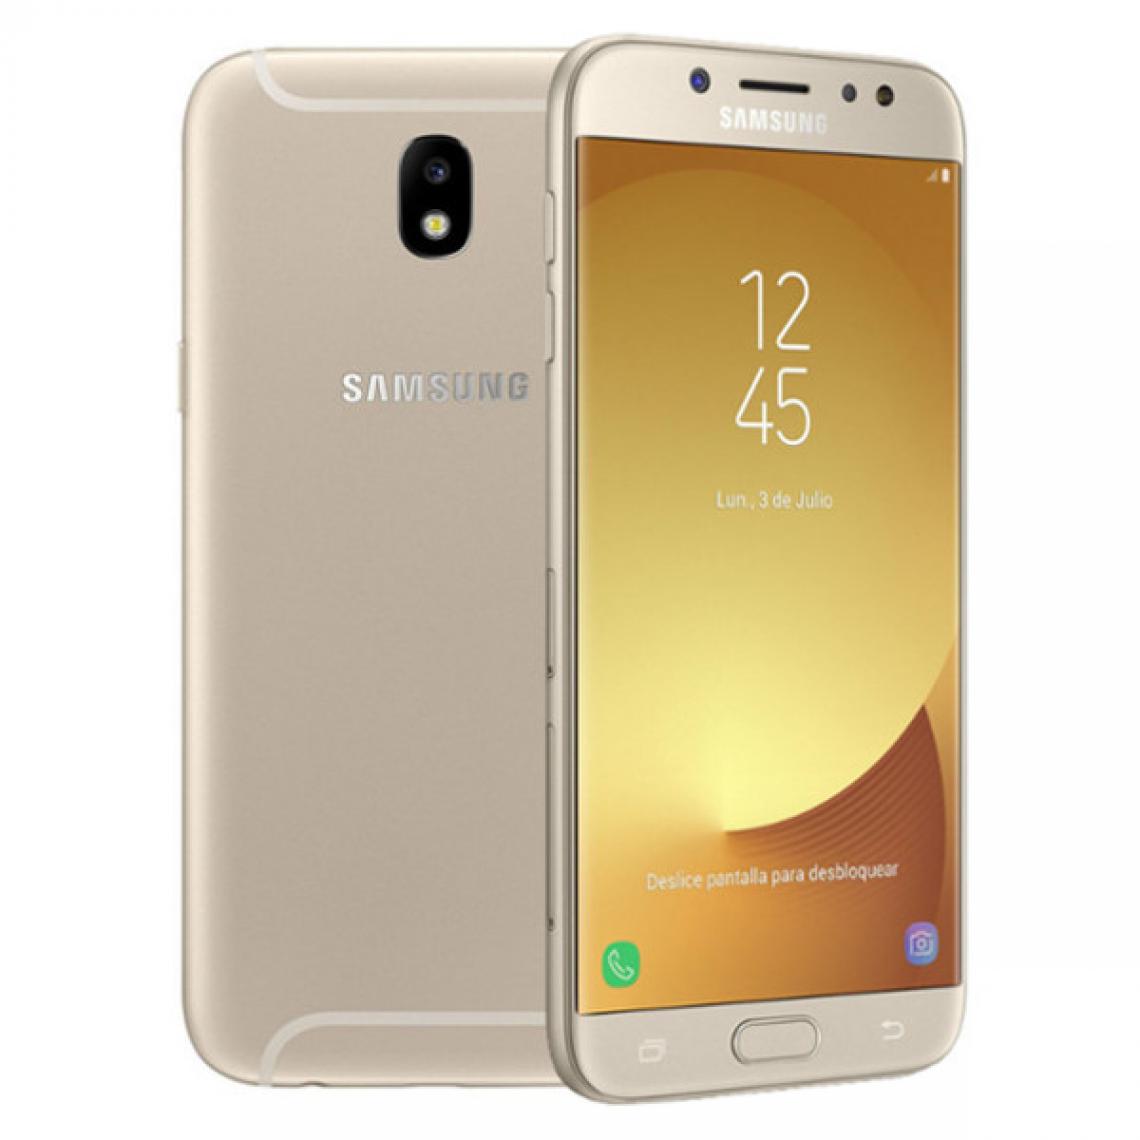 Samsung - Samsung Galaxy J7 (2017) Or Dual SIM J730FN - Smartphone Android